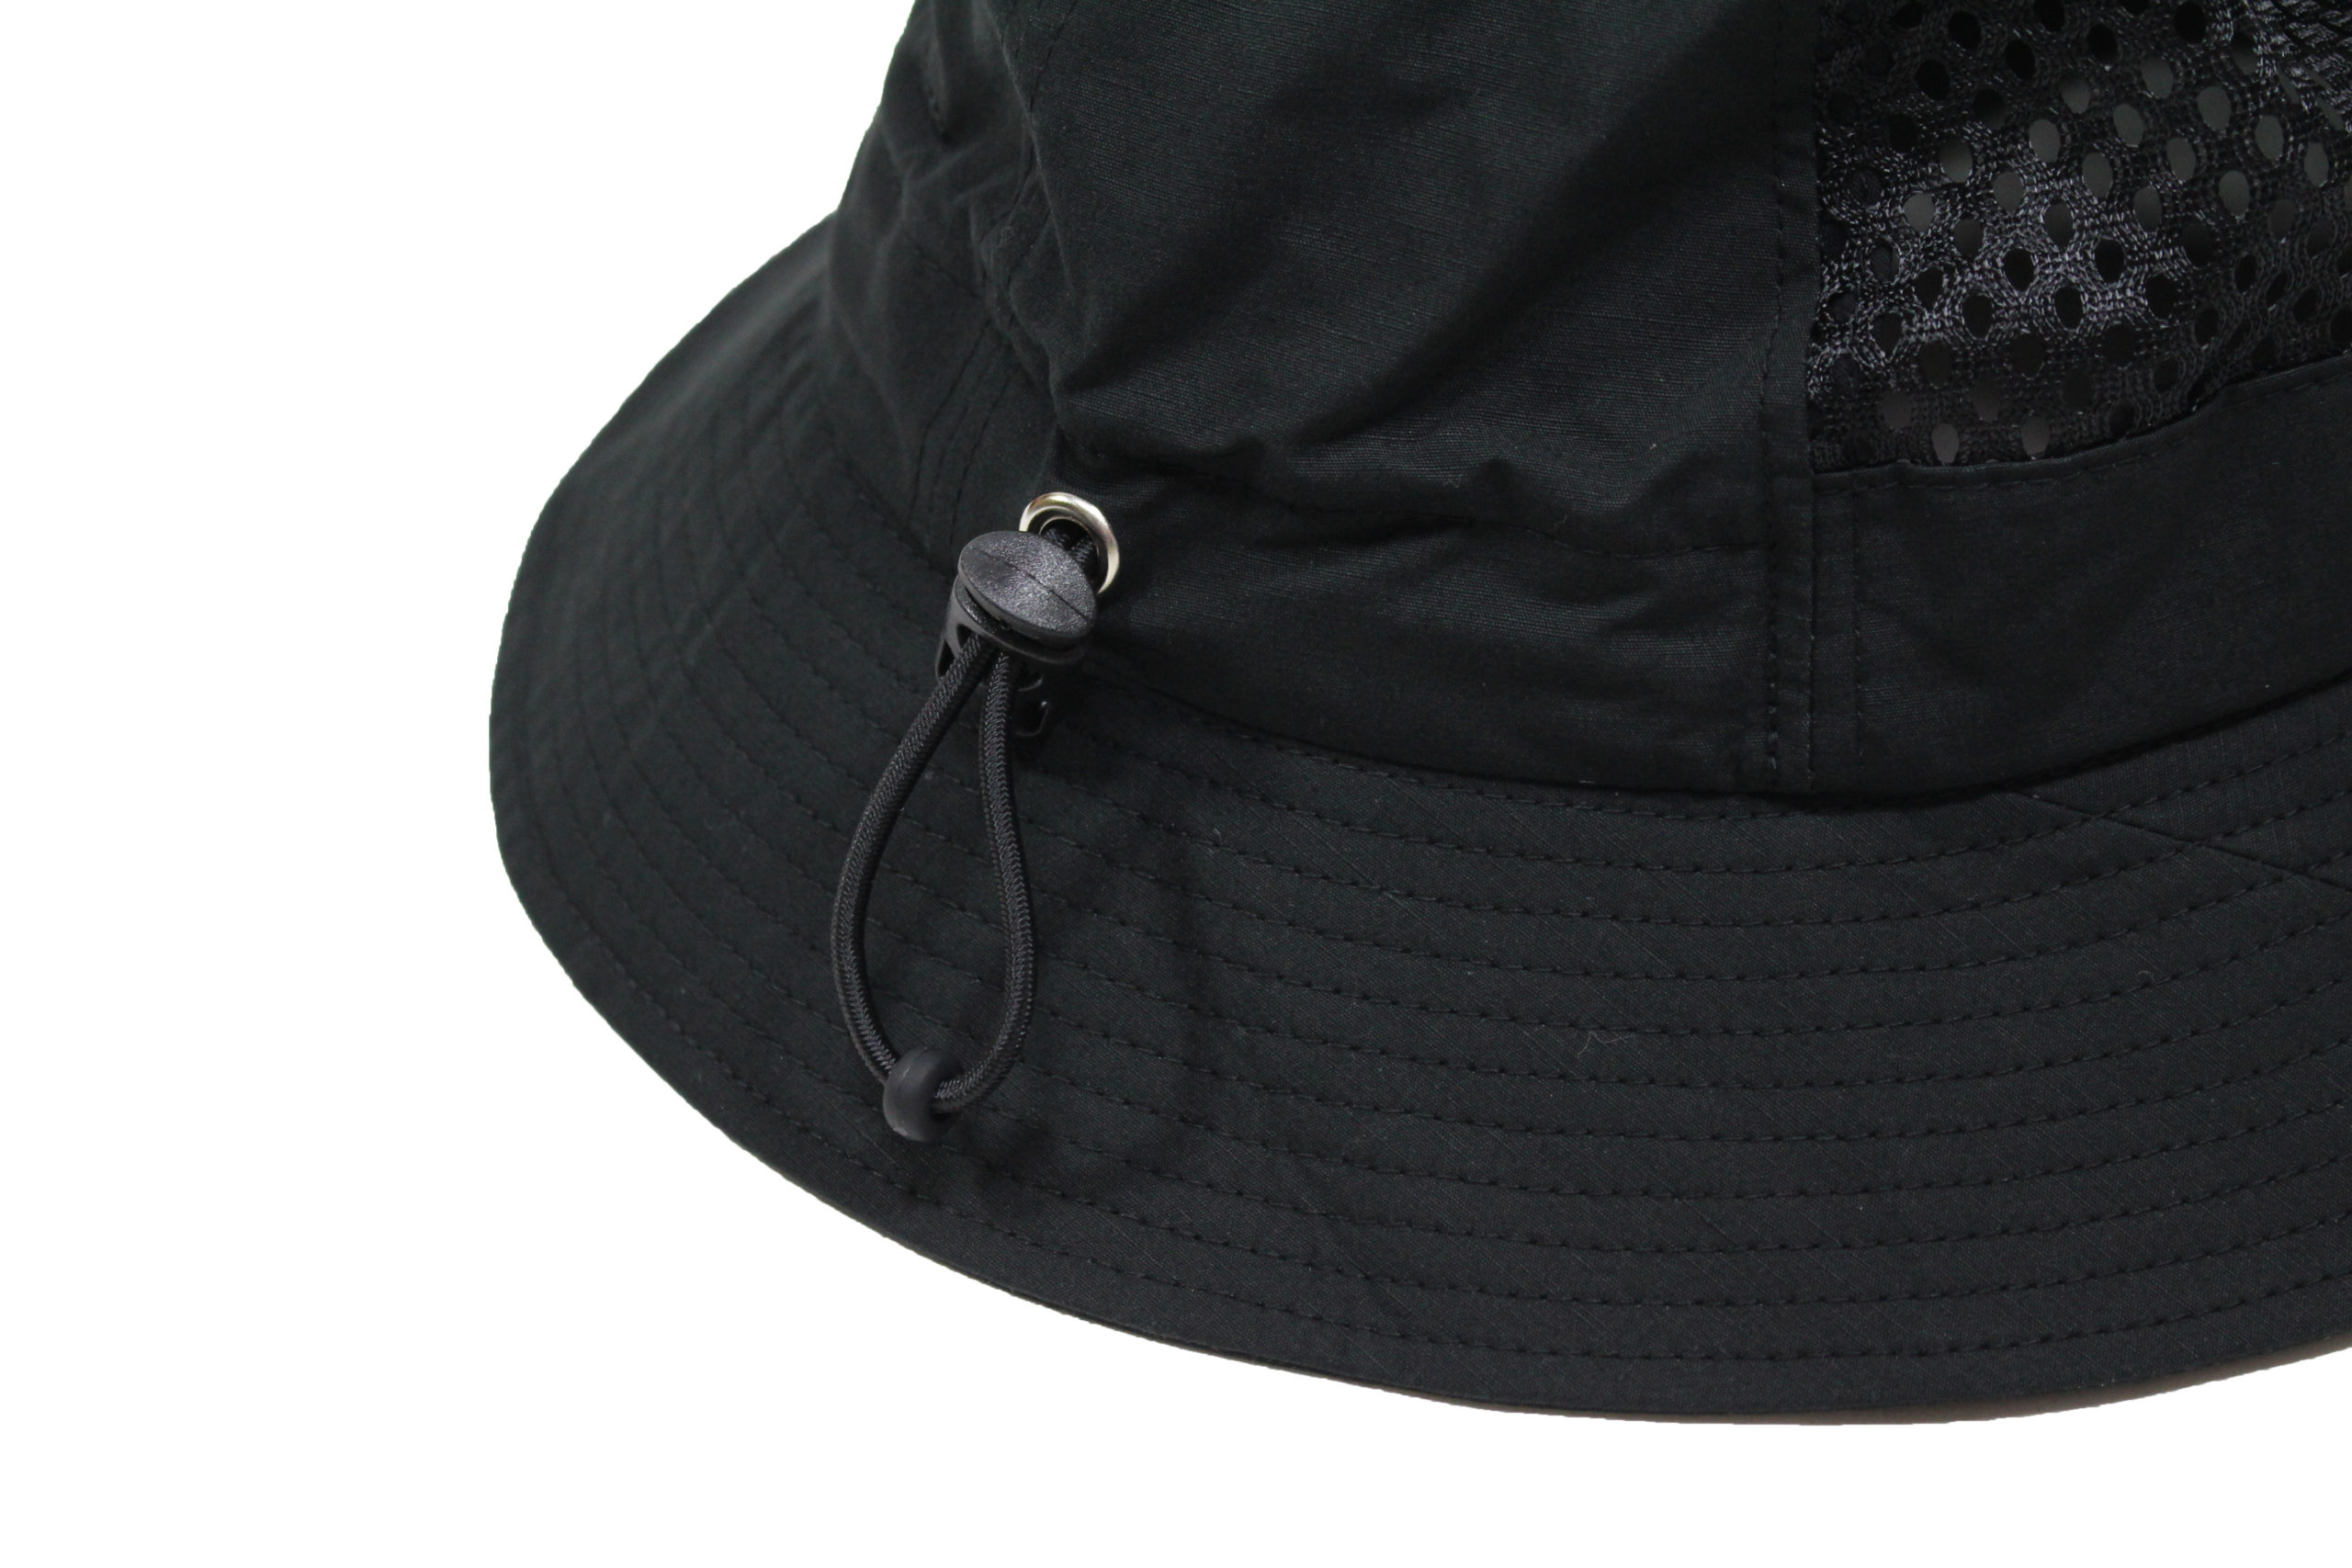 PALETOWN NOROLL TRAVELLERS TROPICAL HAT&CAP